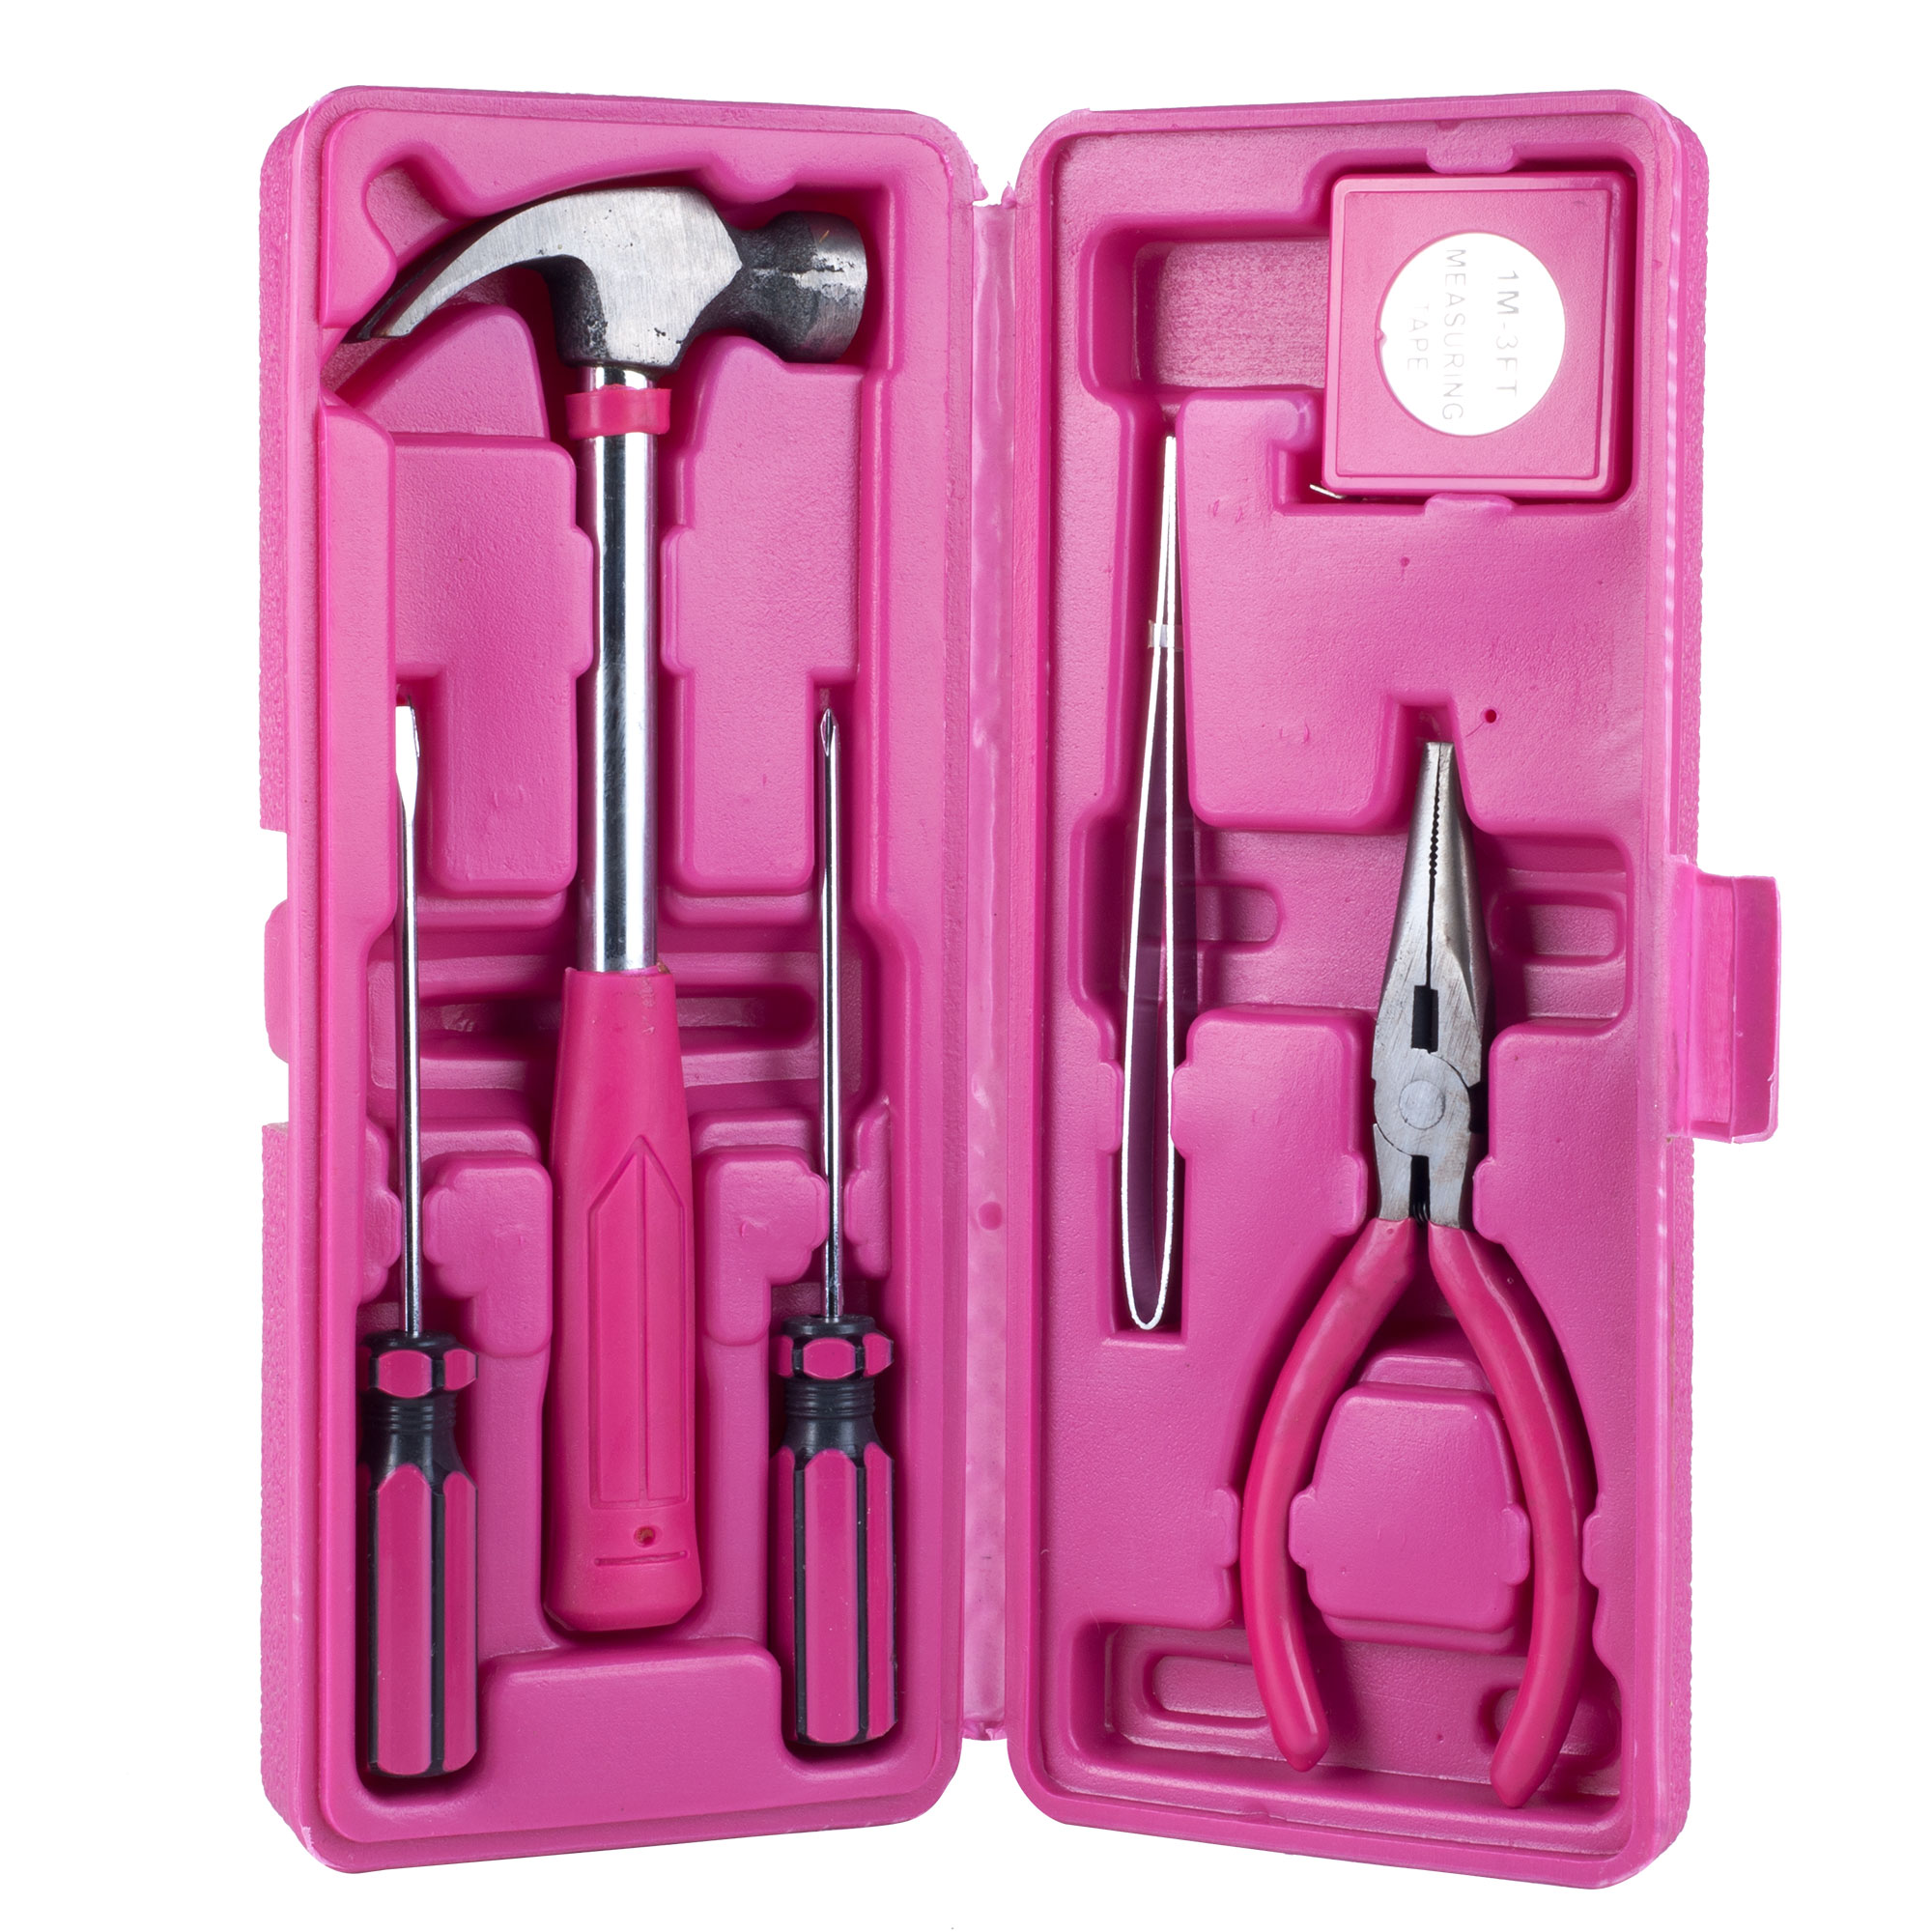 Stalwart 7 Piece Home Auto Emergency Tool Kit - Pink